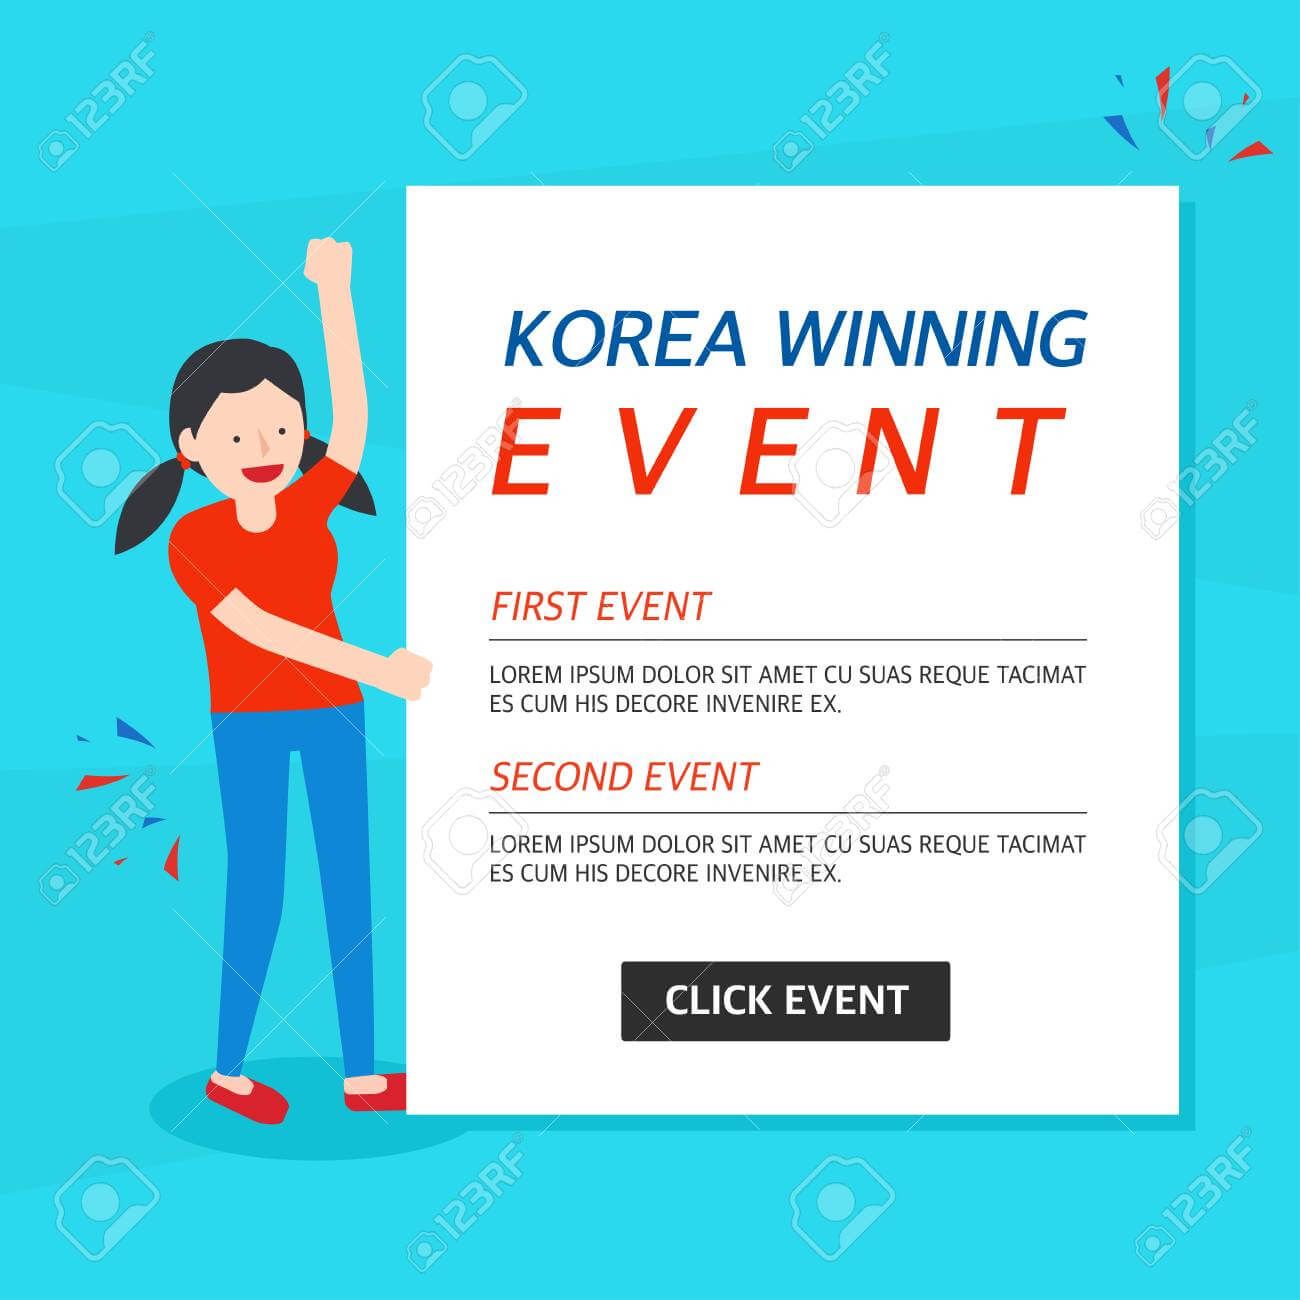 Korea Winning Event Banner Template In Event Banner Template